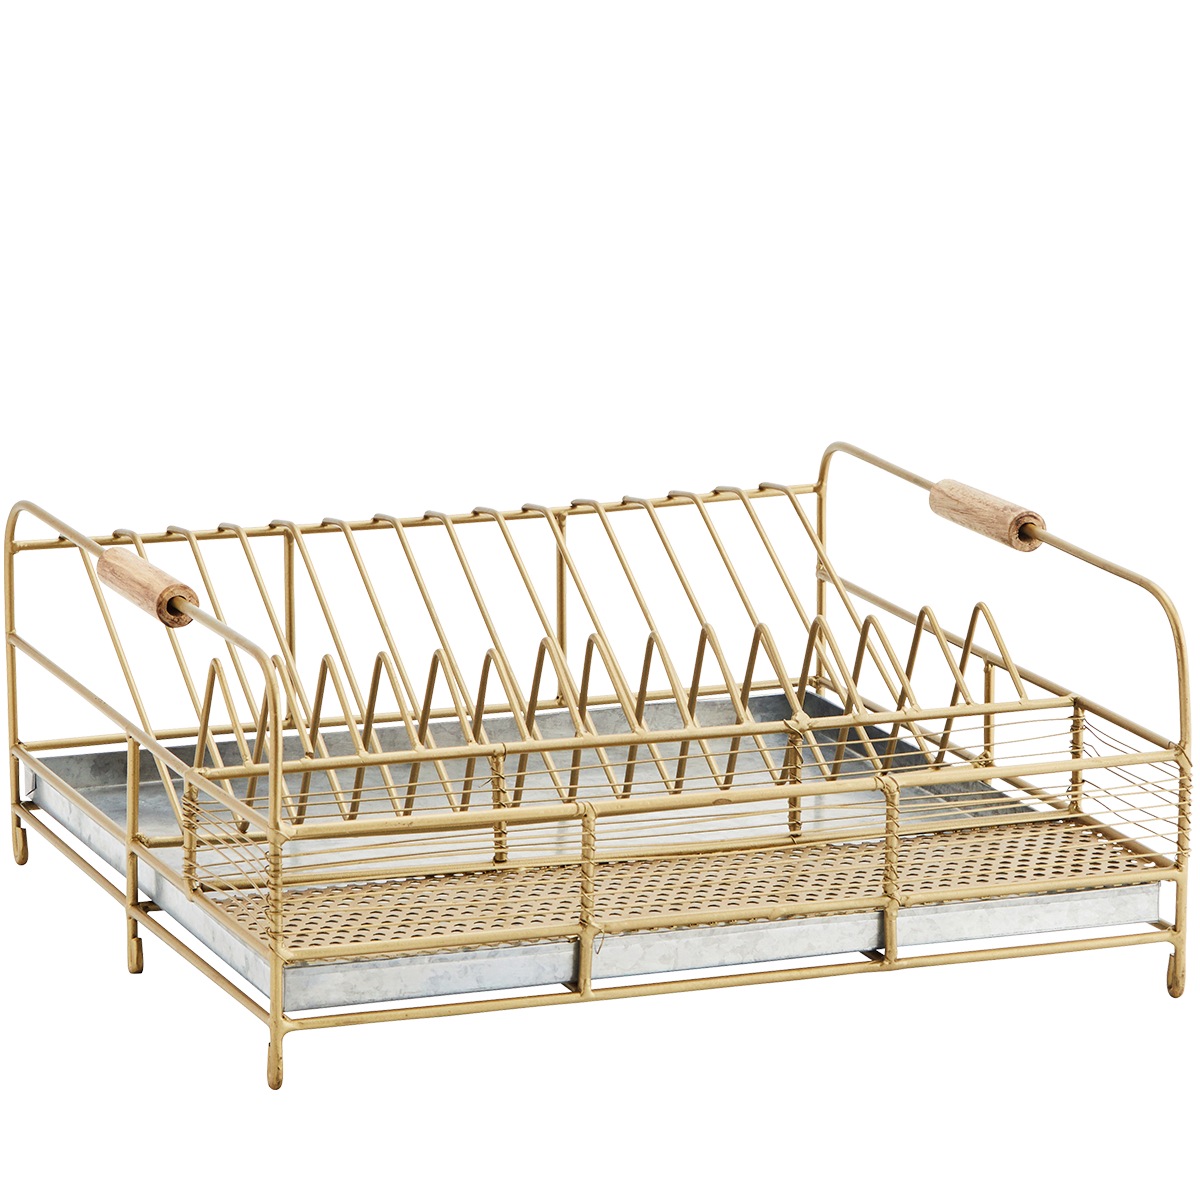 https://royaldesign.com/image/11/madam-stoltz-iron-dish-rack-with-drip-tray-0?w=800&quality=80